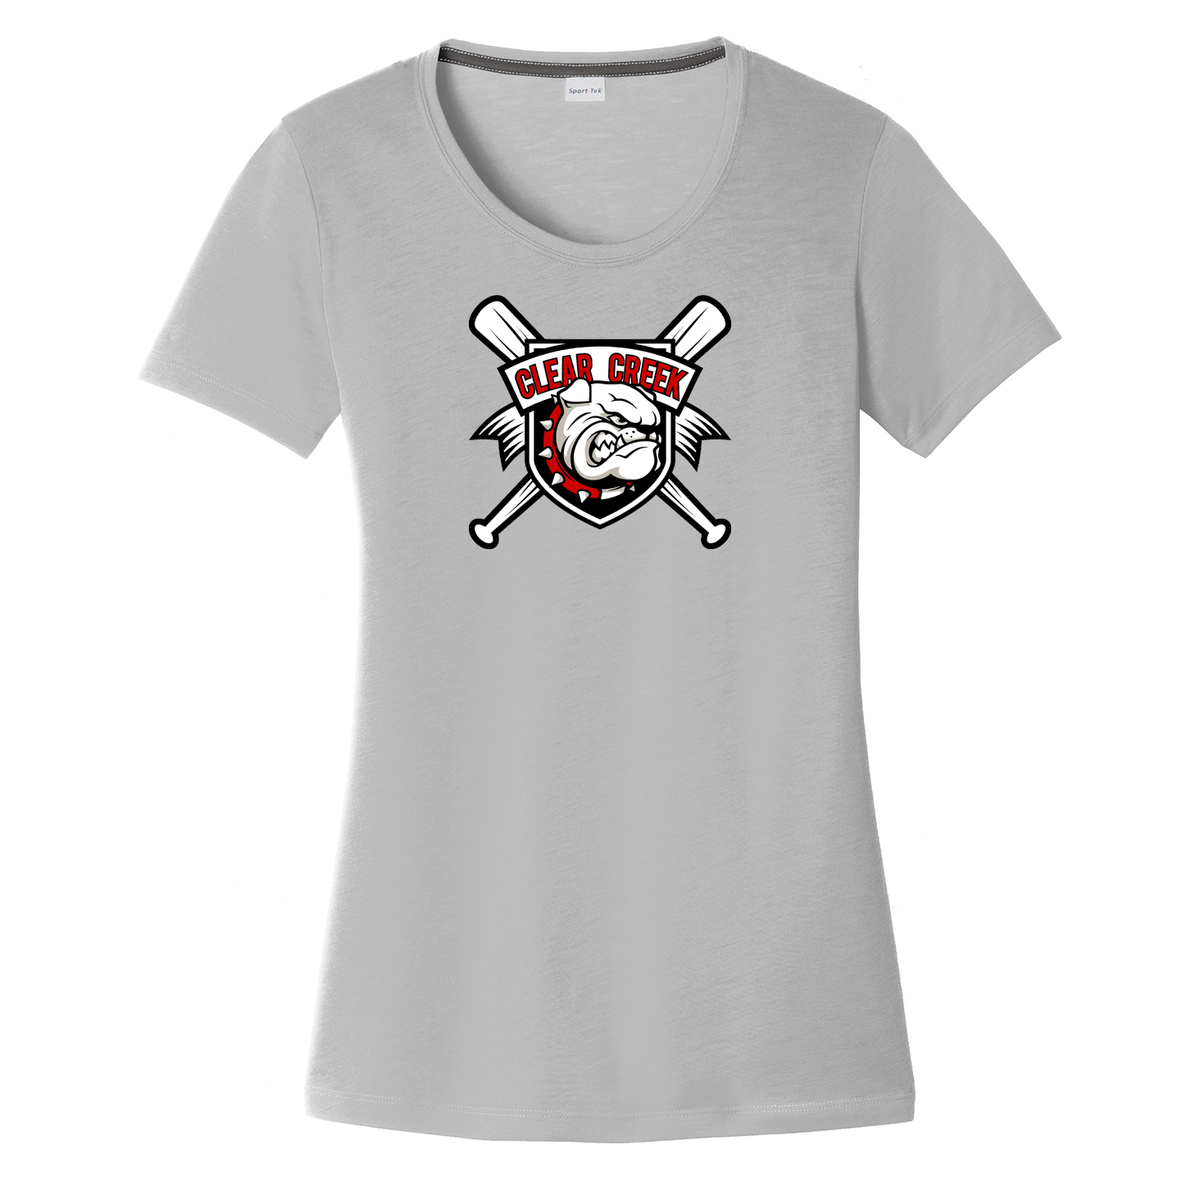 Clear Creek Bulldog Baseball  Women's CottonTouch Performance T-Shirt